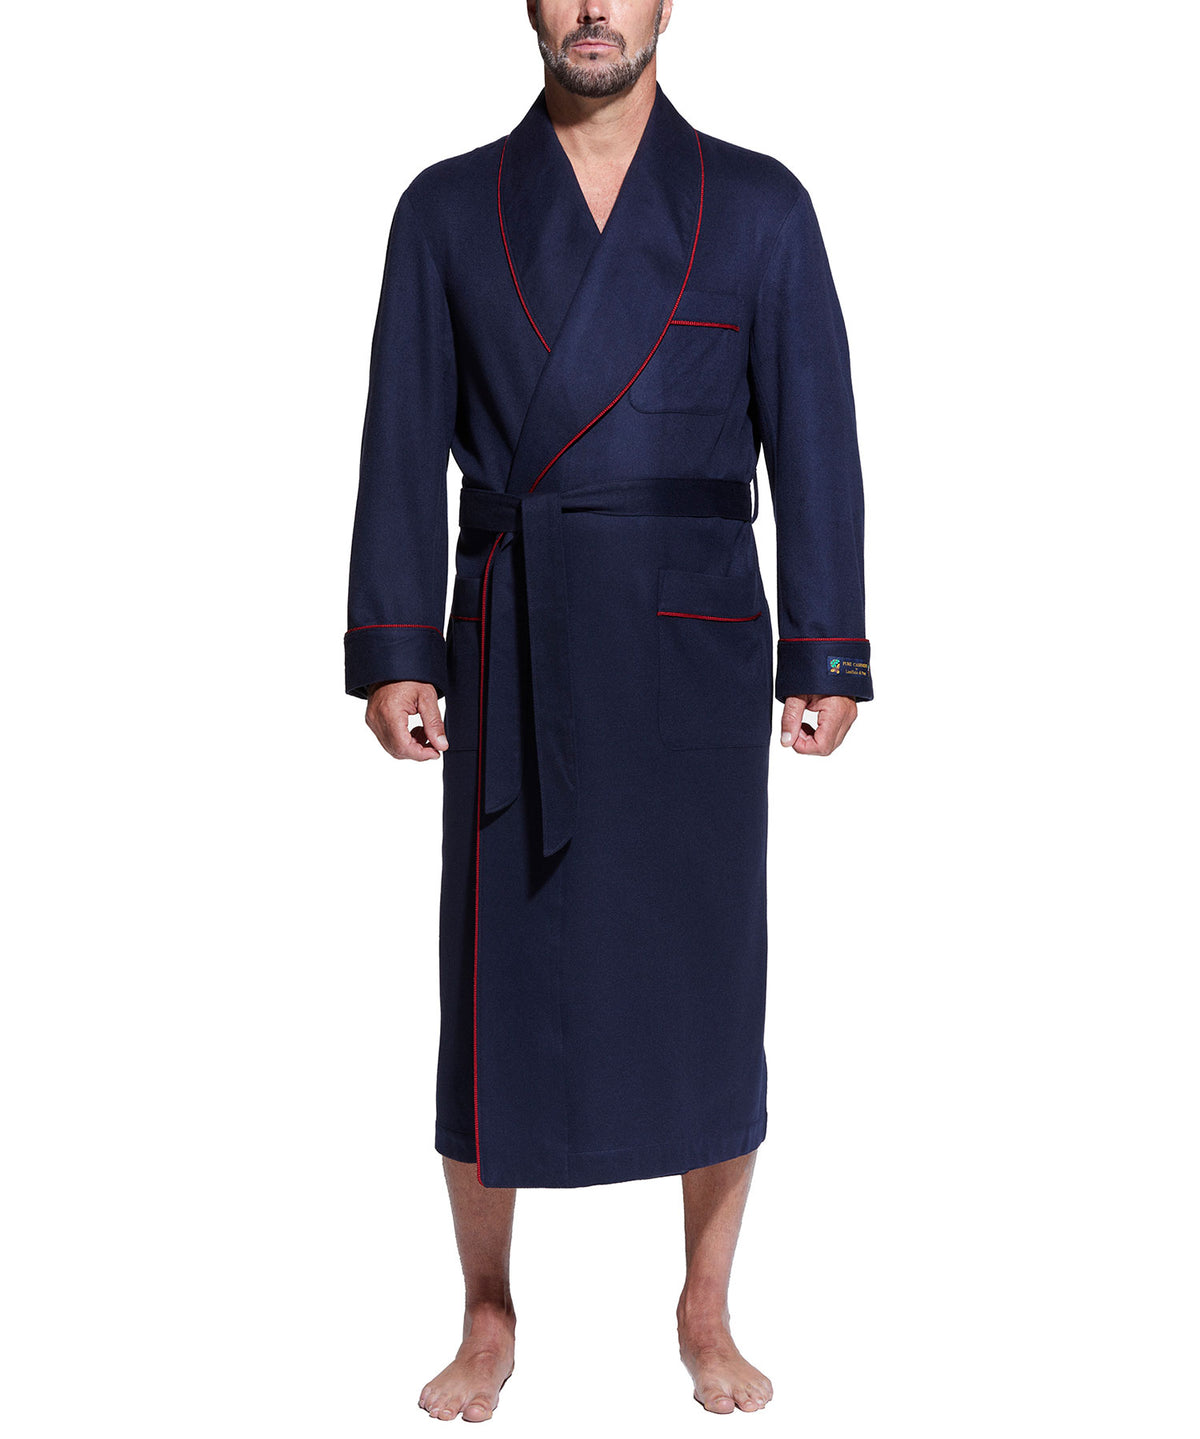 Westport Black Made-to-Order Customizable Cashmere Shawl Robe, Men's Big & Tall